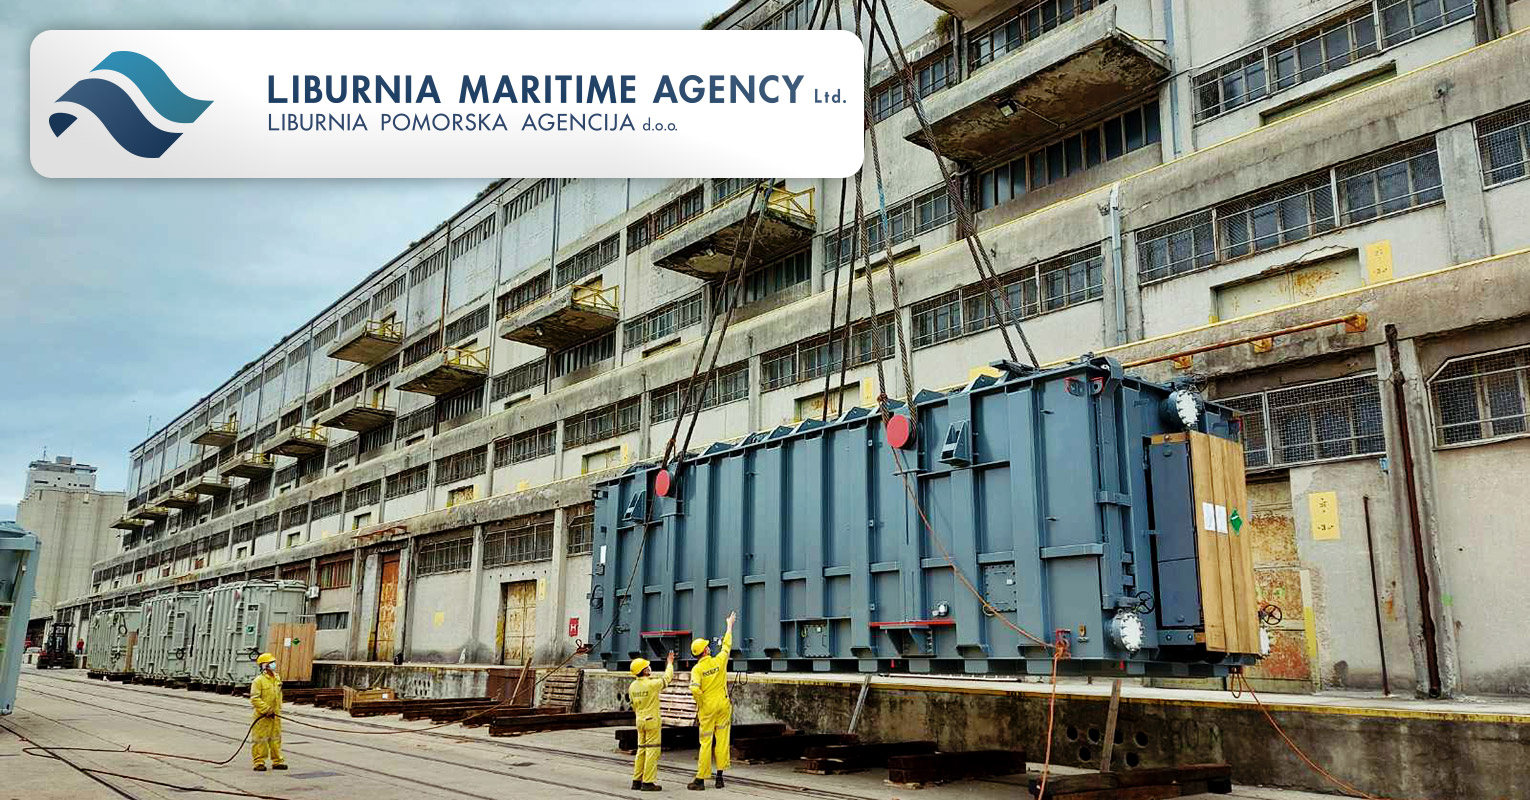 Liburnia Maritime shipped 52 transformers in 2020